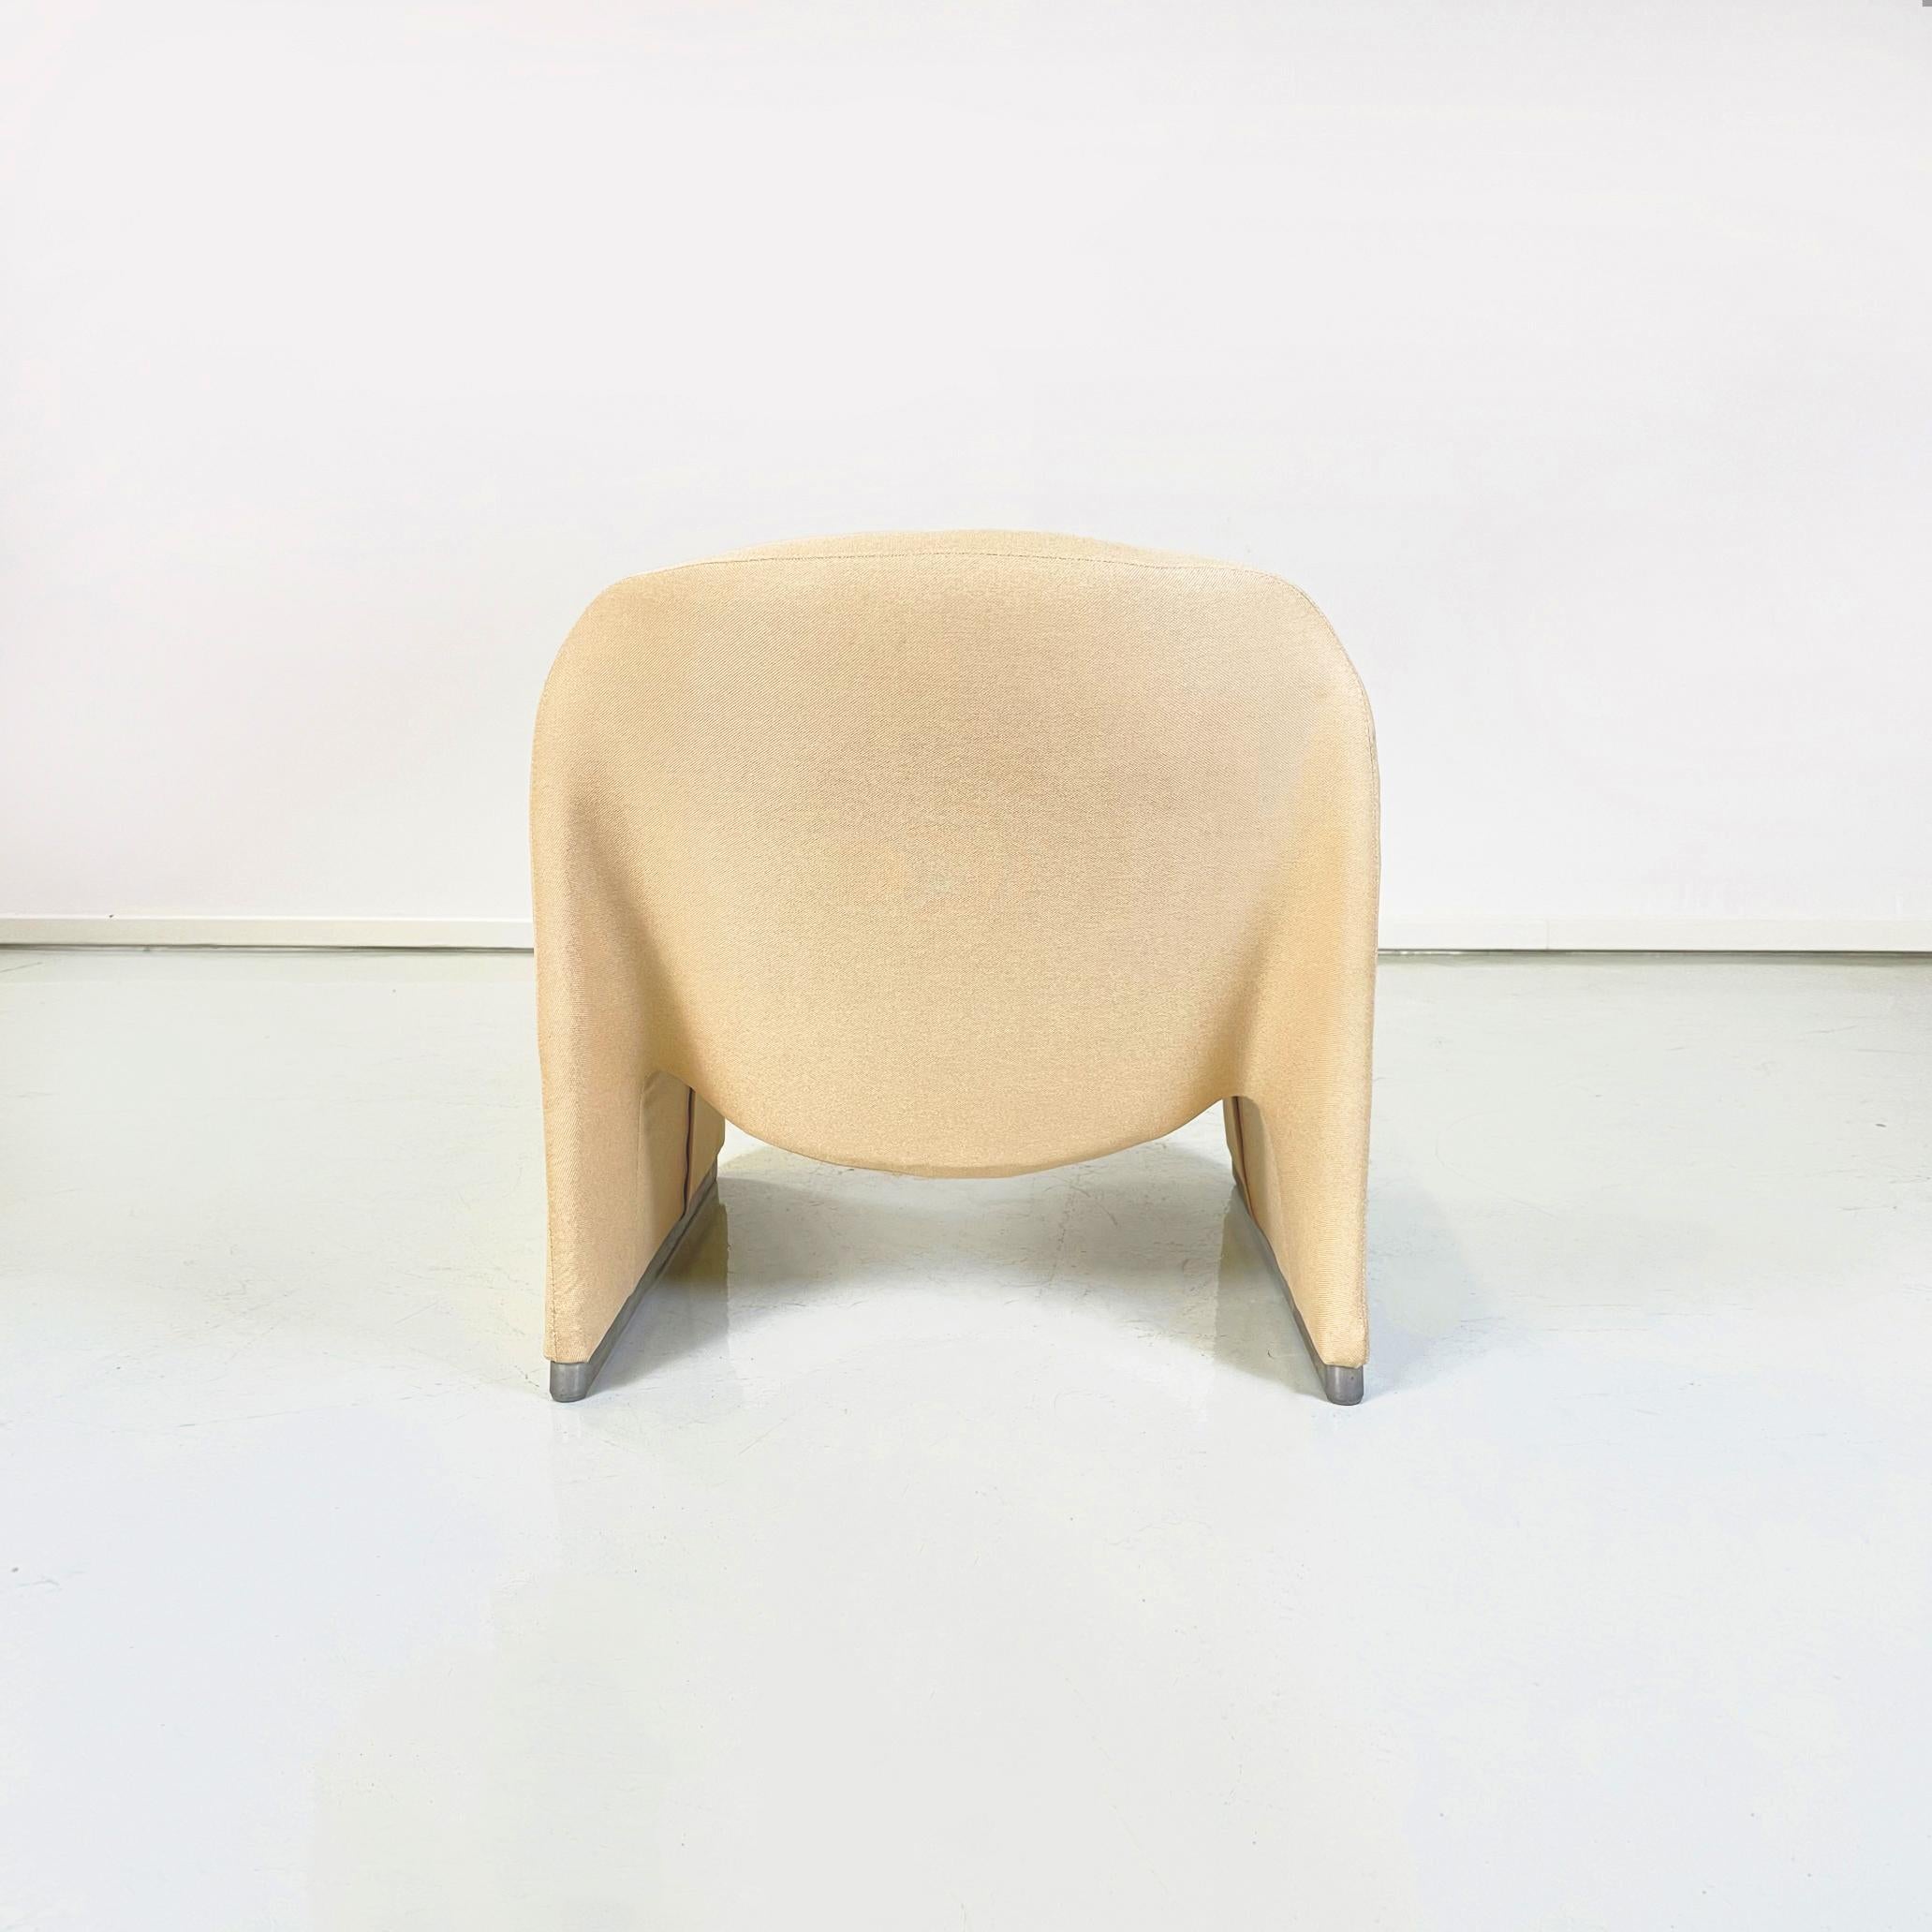 Late 20th Century Italian Modern Beige Chairs Alky by Giancarlo Piretti for Anonima Castelli, 1970